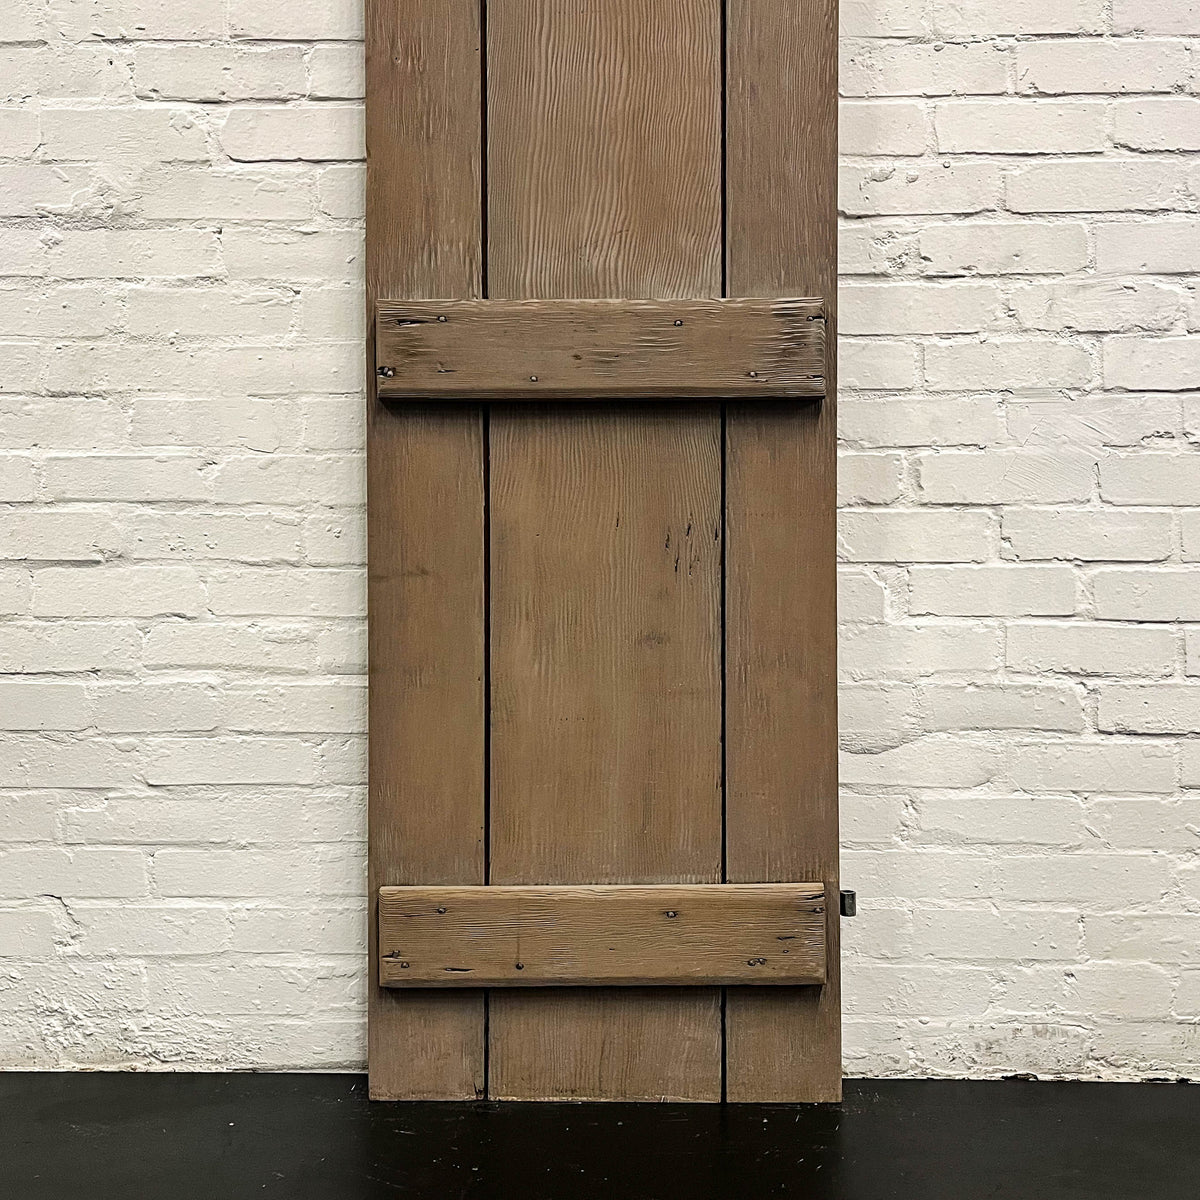 Antique Victorian Pine Latch Door - 186cm x 59cm | The Architectural Forum